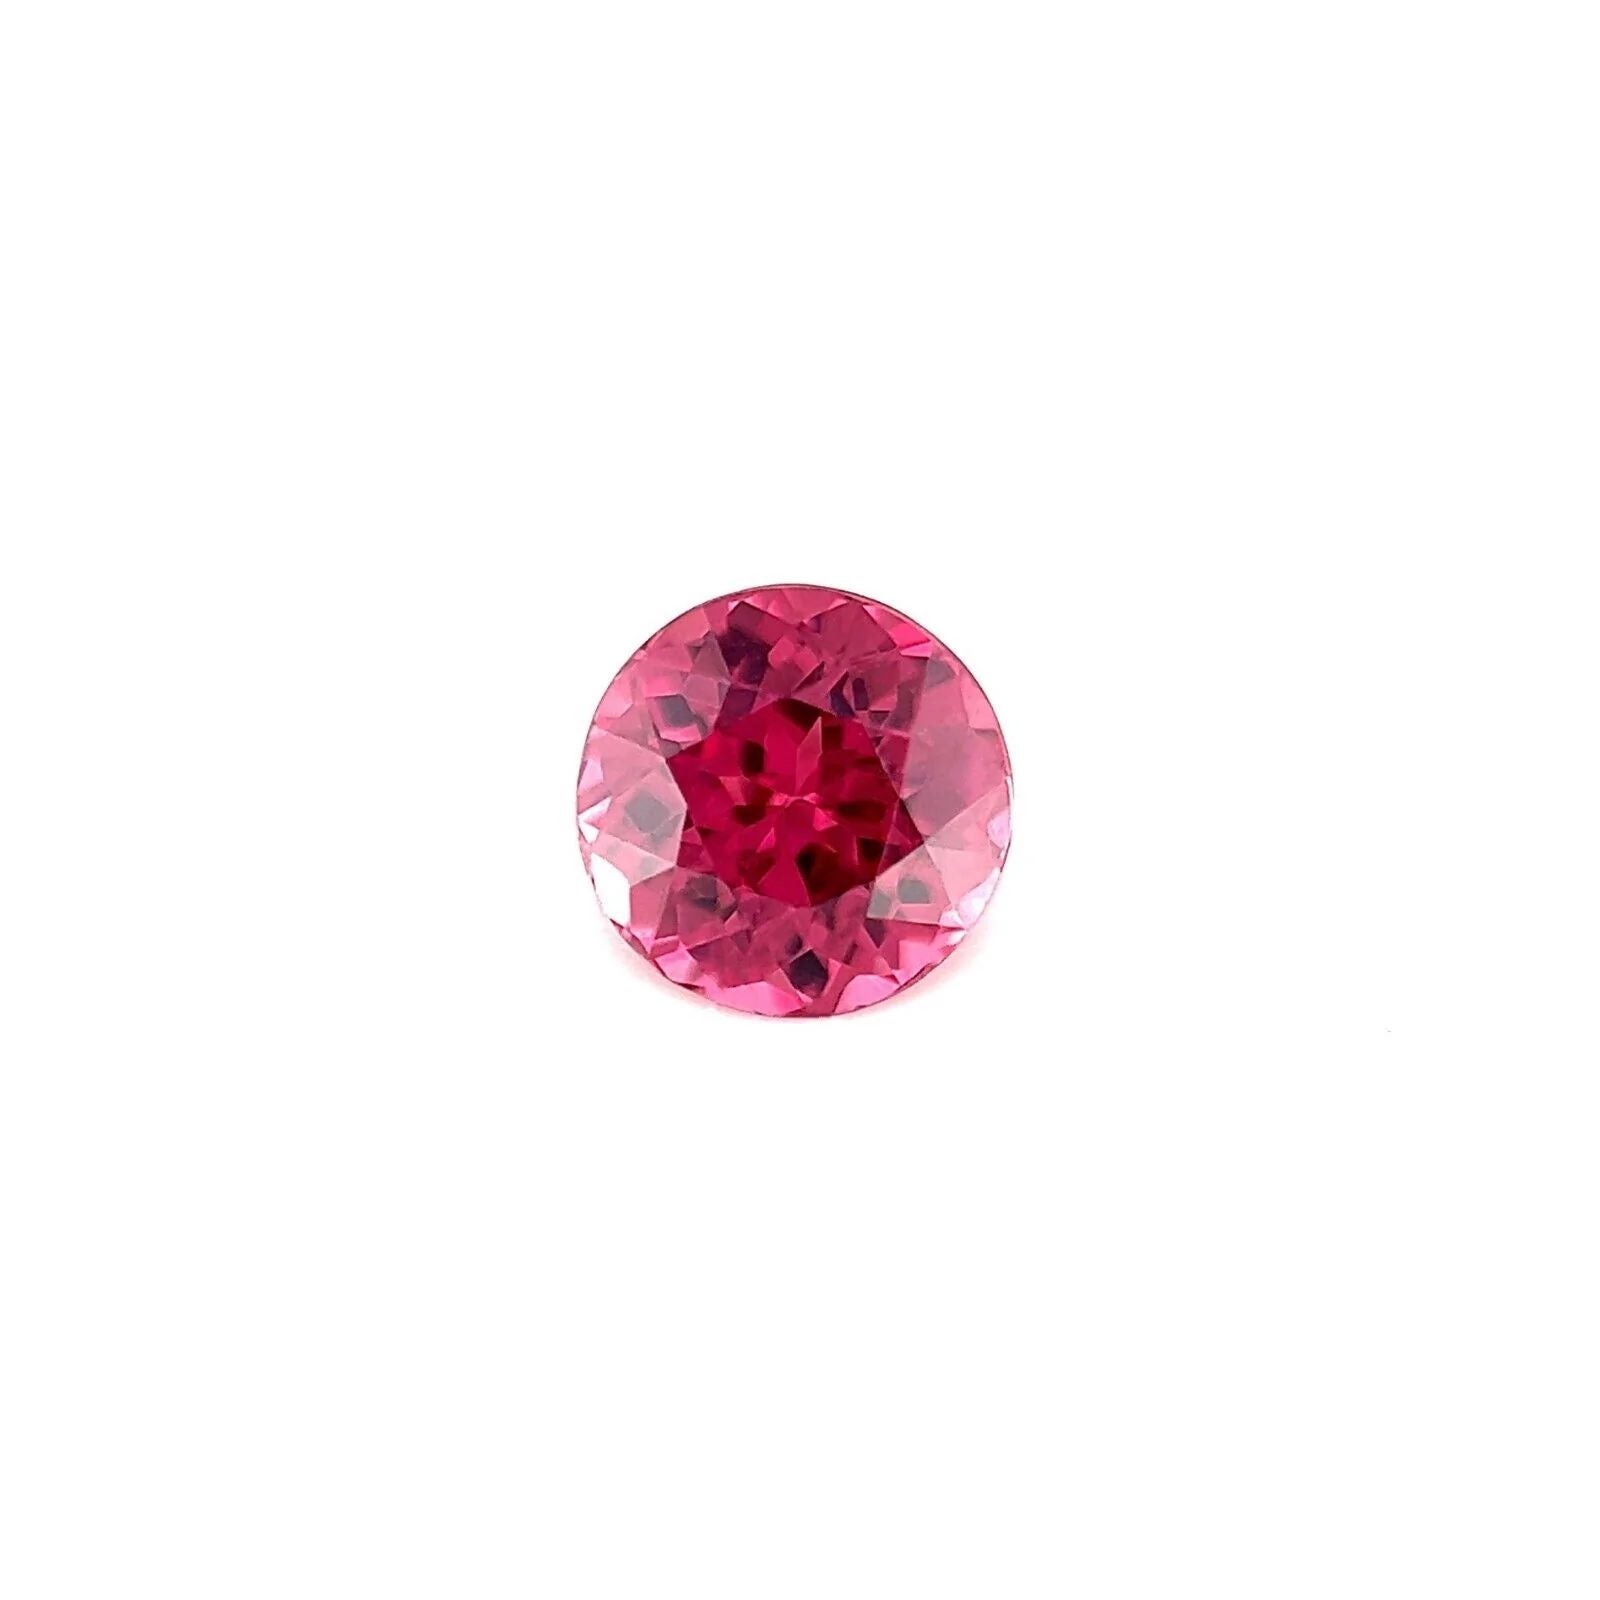 1,11 Karat lebhaft lila rosa Rhodolith Granat im runden Brillantschliff Edelstein VS